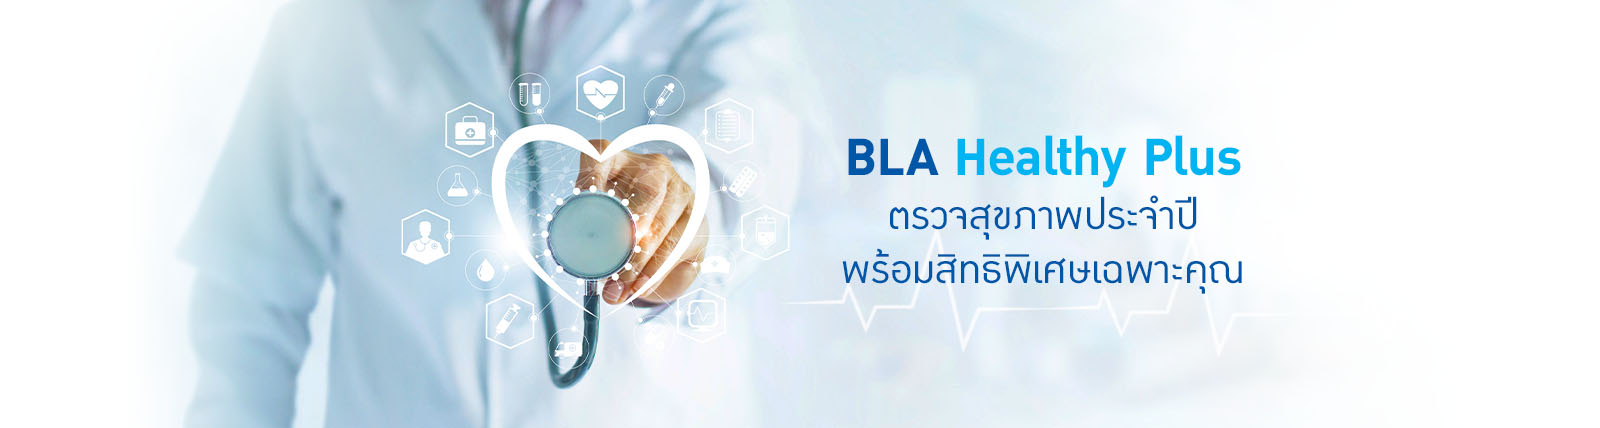 Banner BLA Healthy Plus